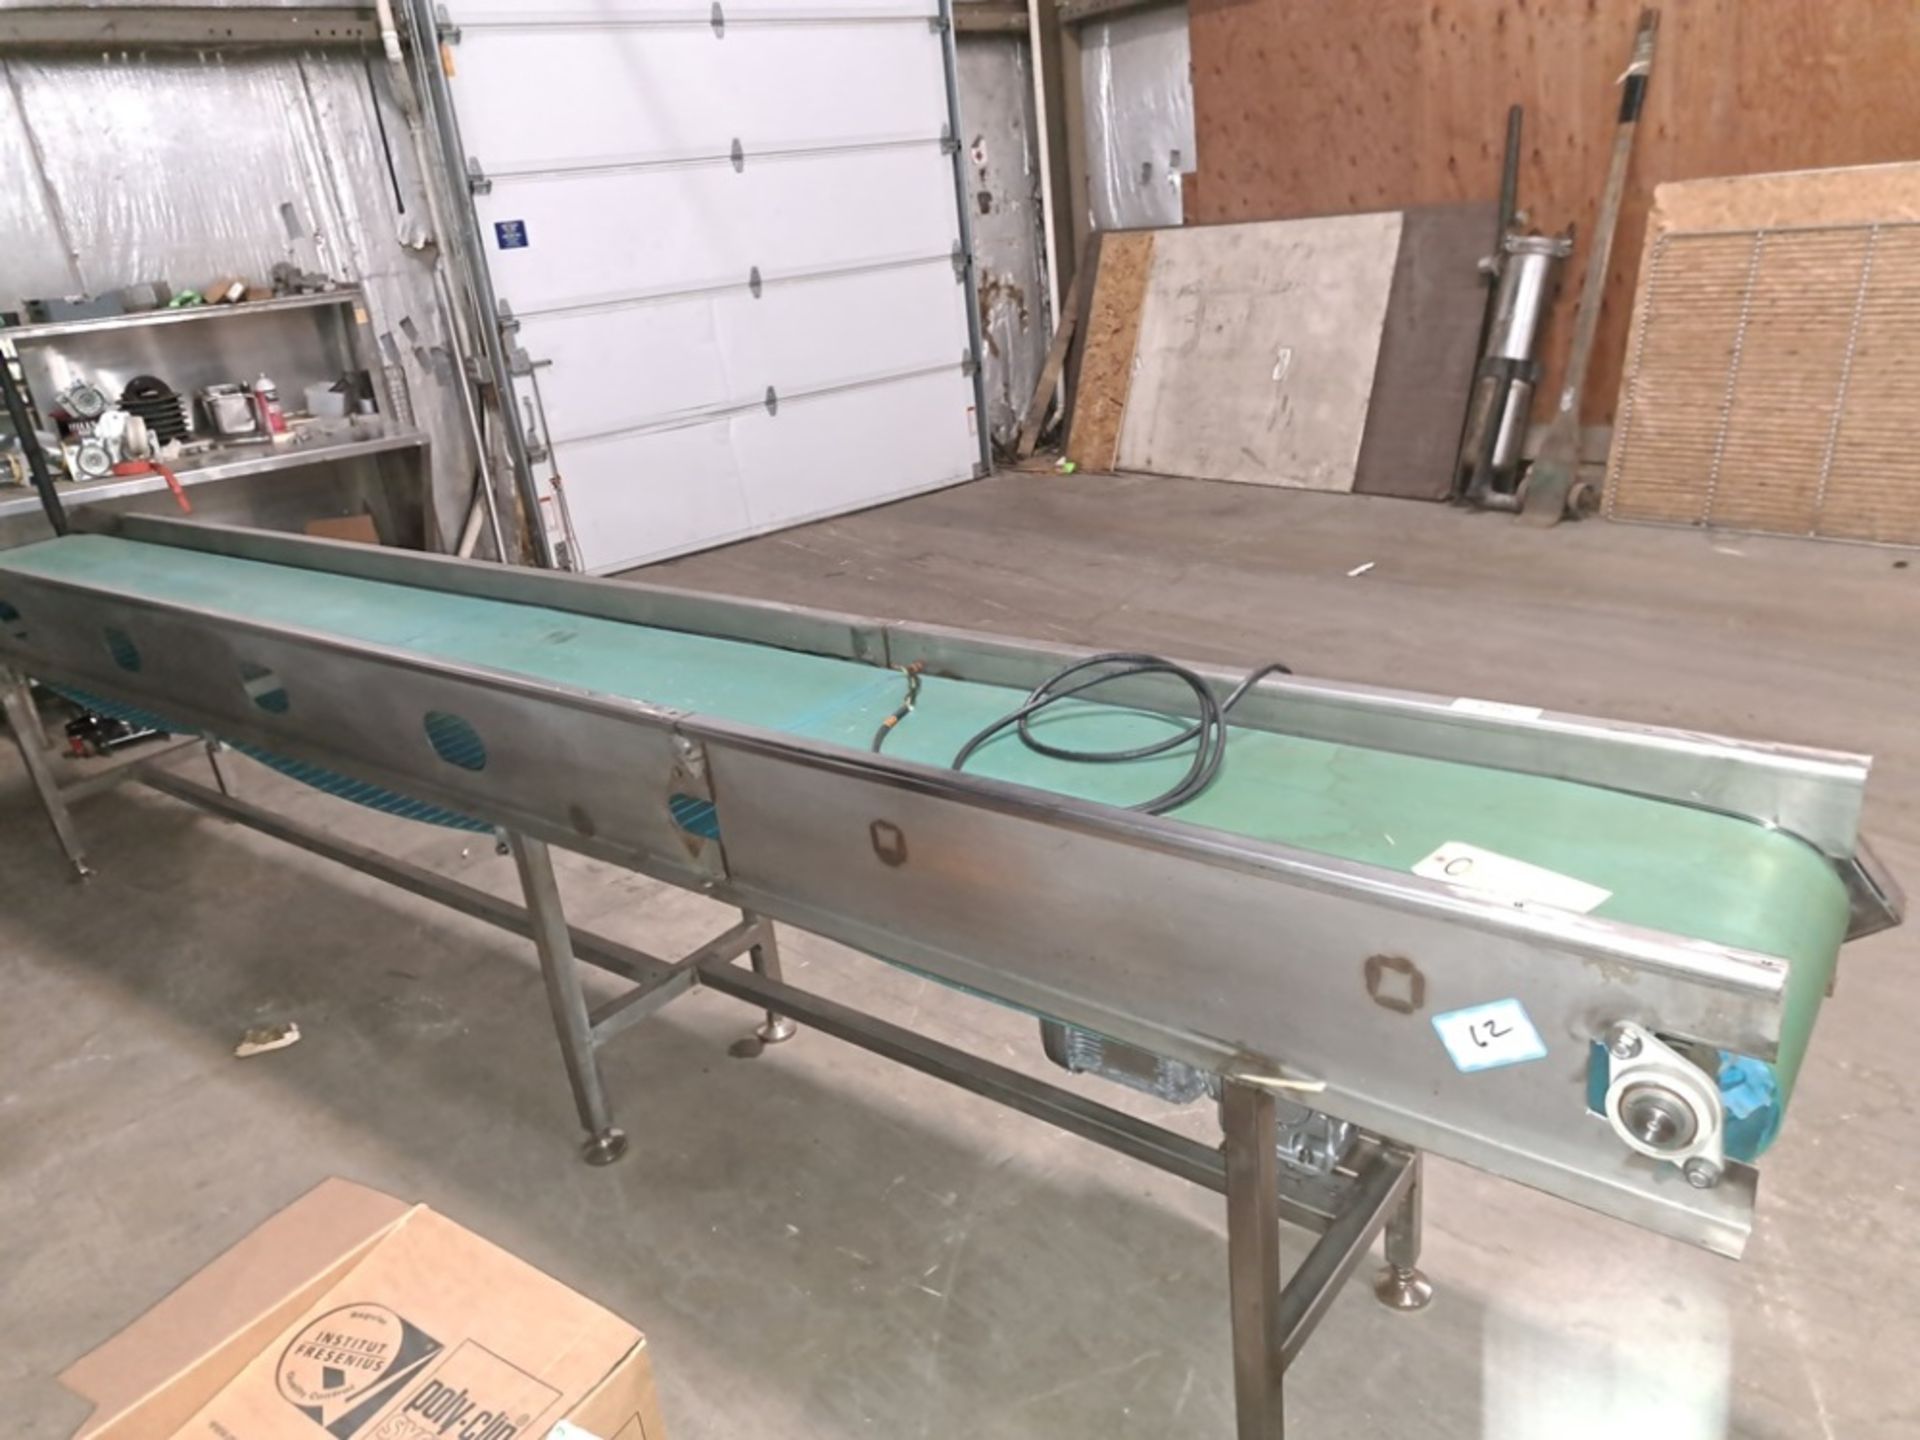 Conveyor, 13 3/4" wide X 14' long plastic belt X 34" tall, 480 volts (Located in Sandwich, IL)